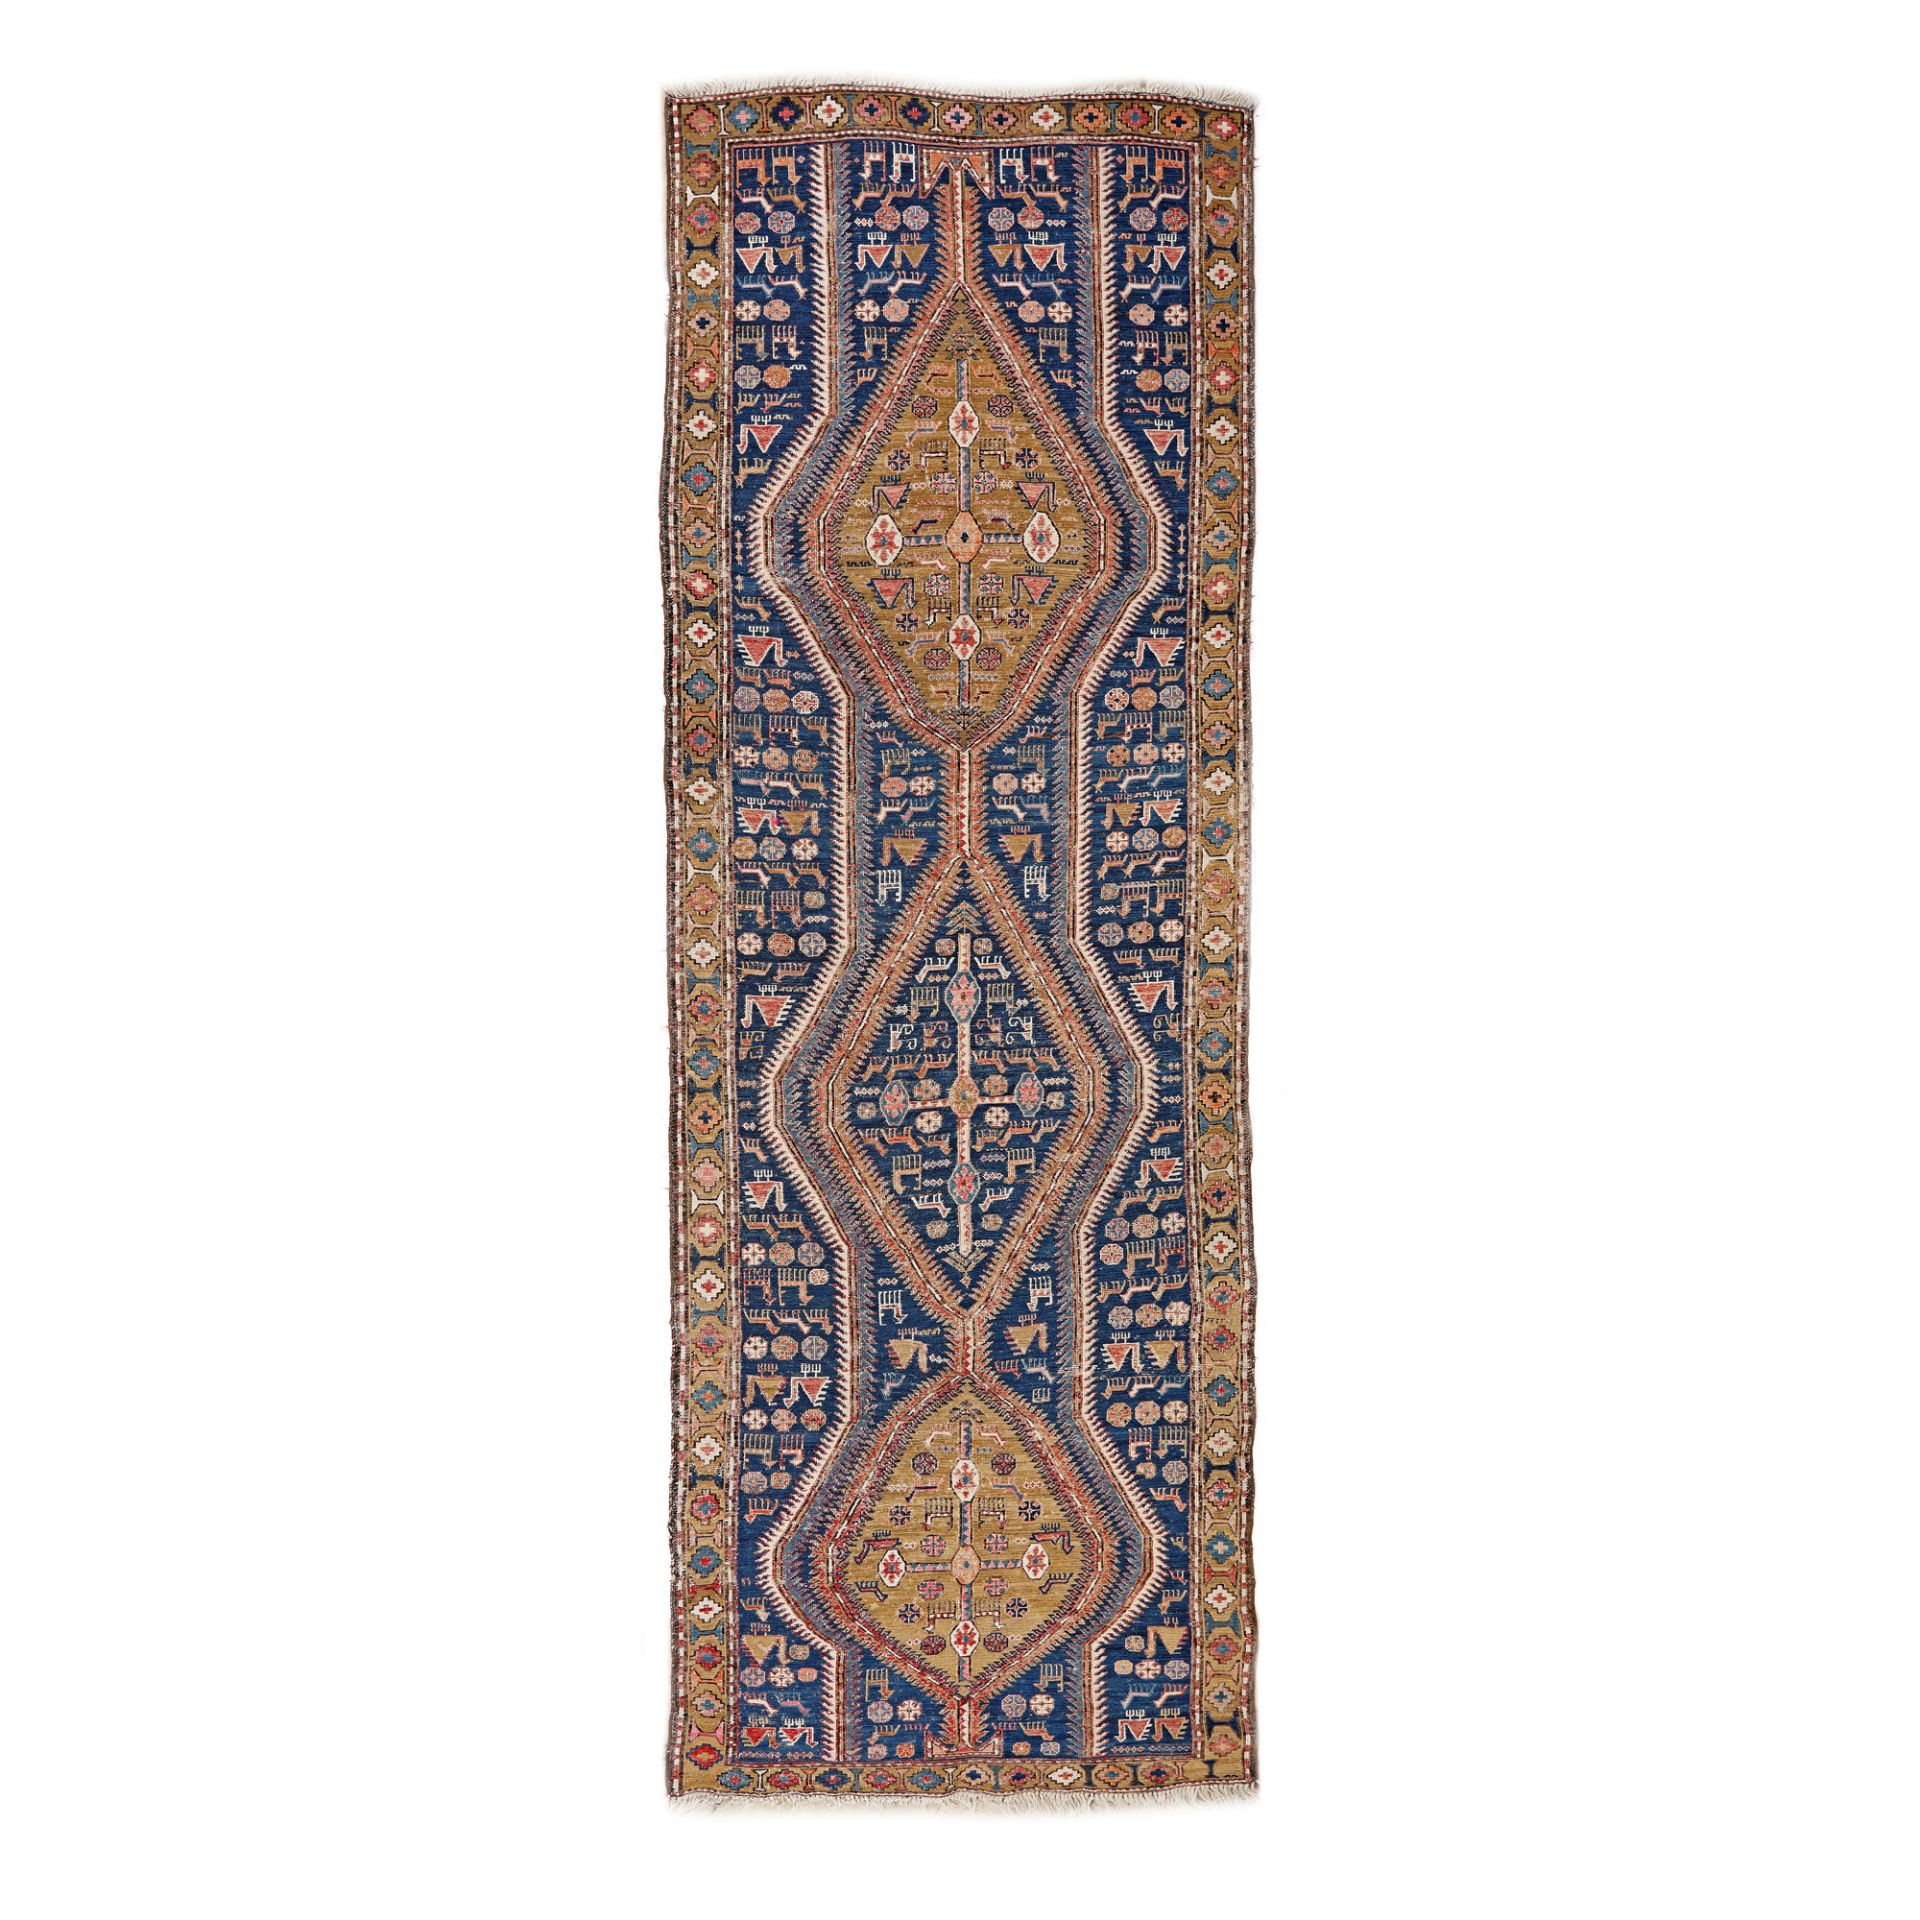 Afshar Kilim wool rug, decorated with zoomorphic motifs, Iran